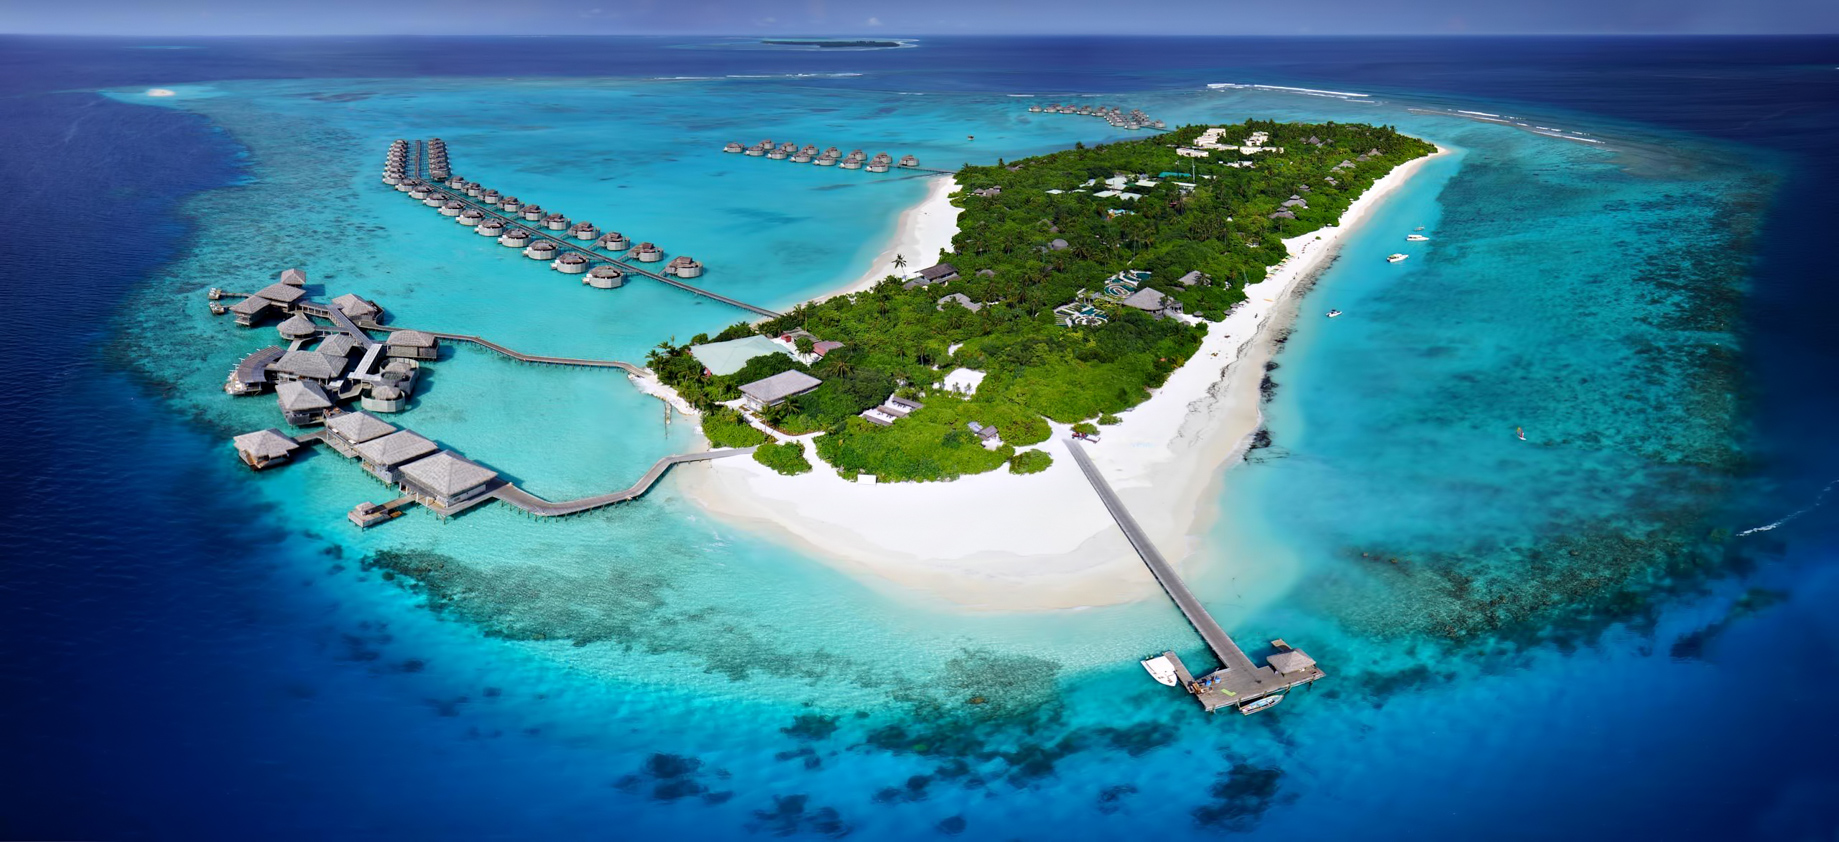 Six Senses Laamu Resort - Laamu Atoll, Maldives - Aerial View